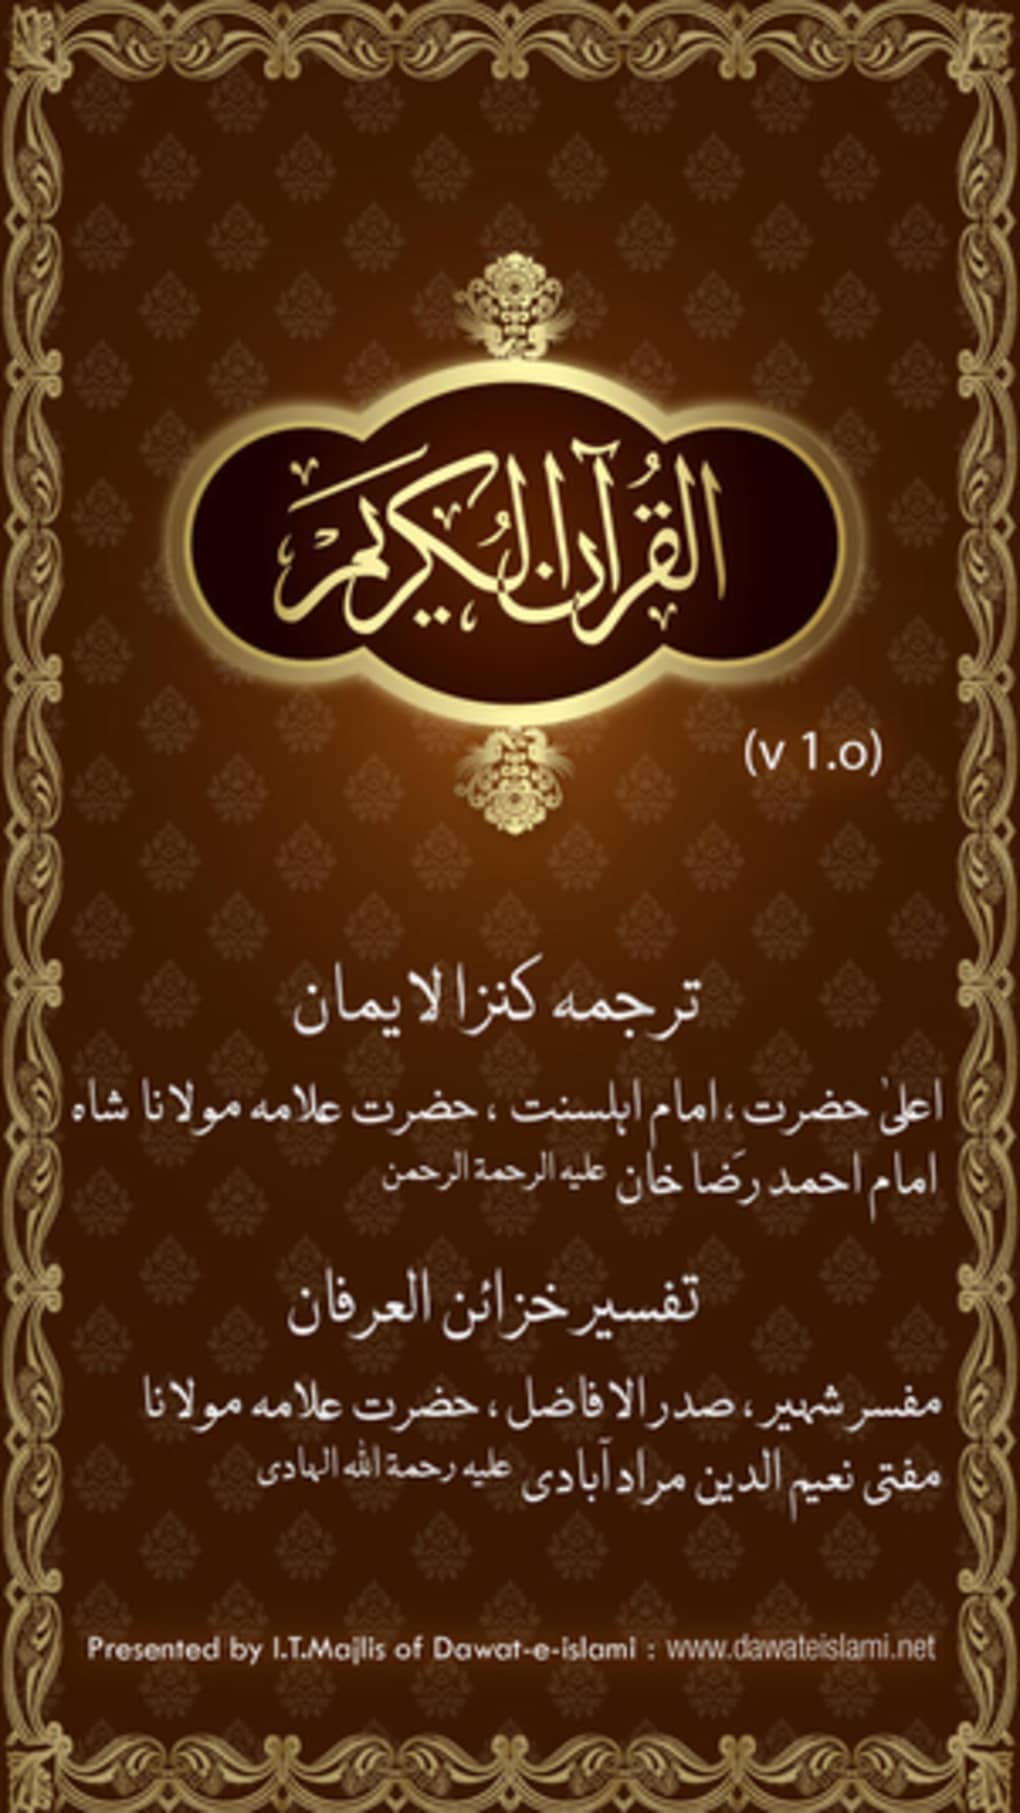 quran karim download for free